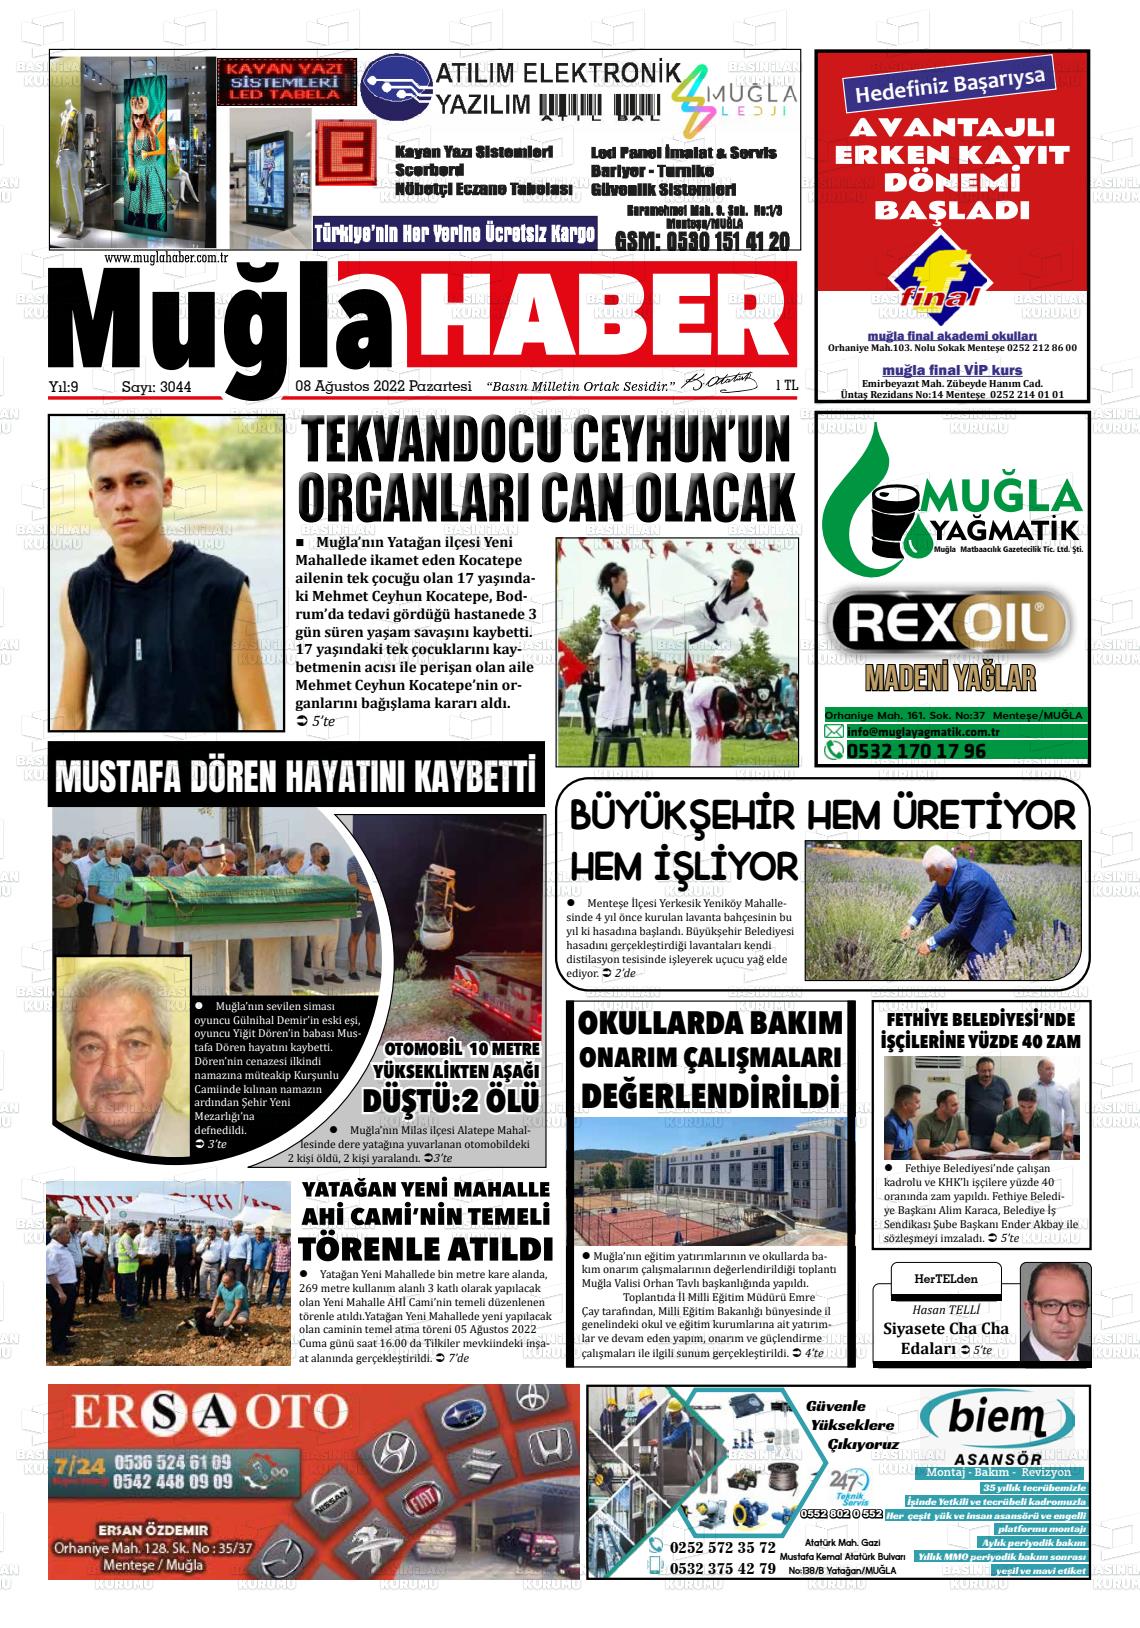 08 Ağustos 2022 Muğla Haber Gazete Manşeti